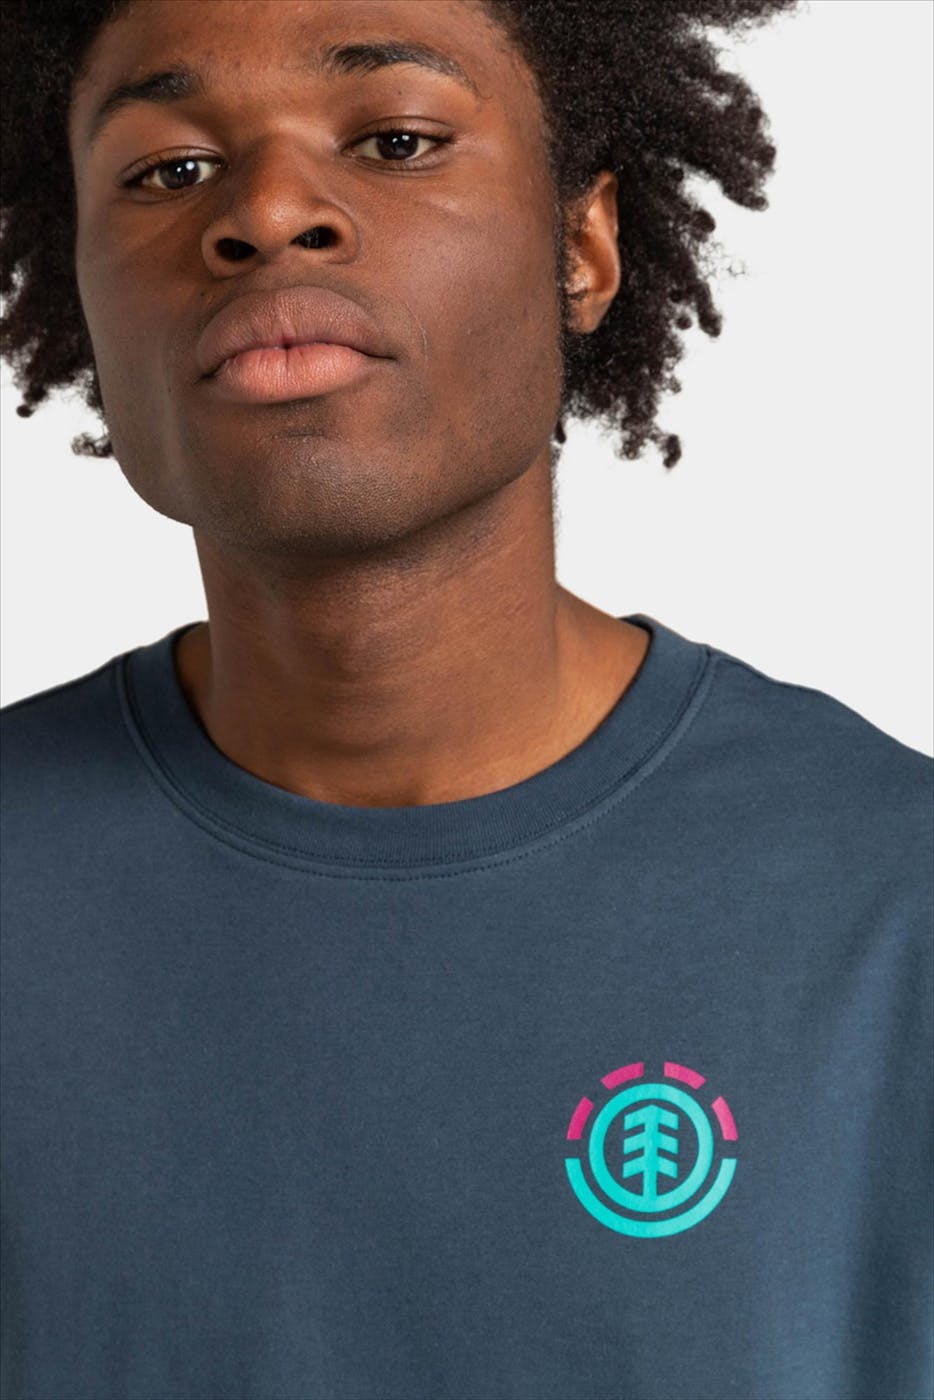 Element - Donkerblauwe Hills T-shirt